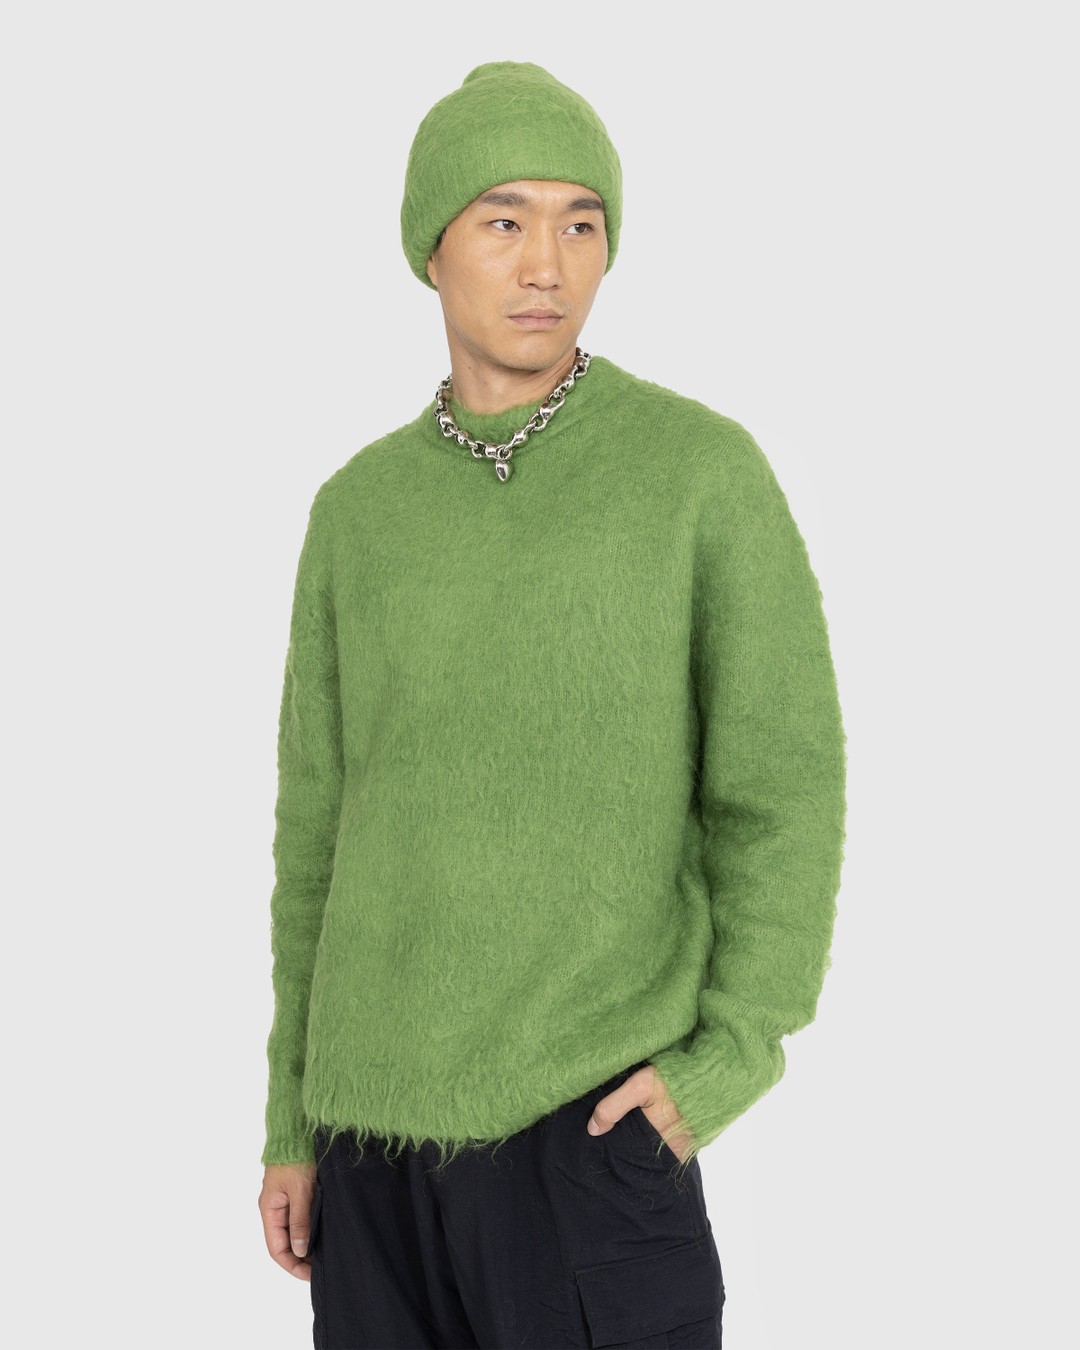 Acne Studios – Hair Crewneck Sweater Pear Green - Knitwear - Green - Image 2